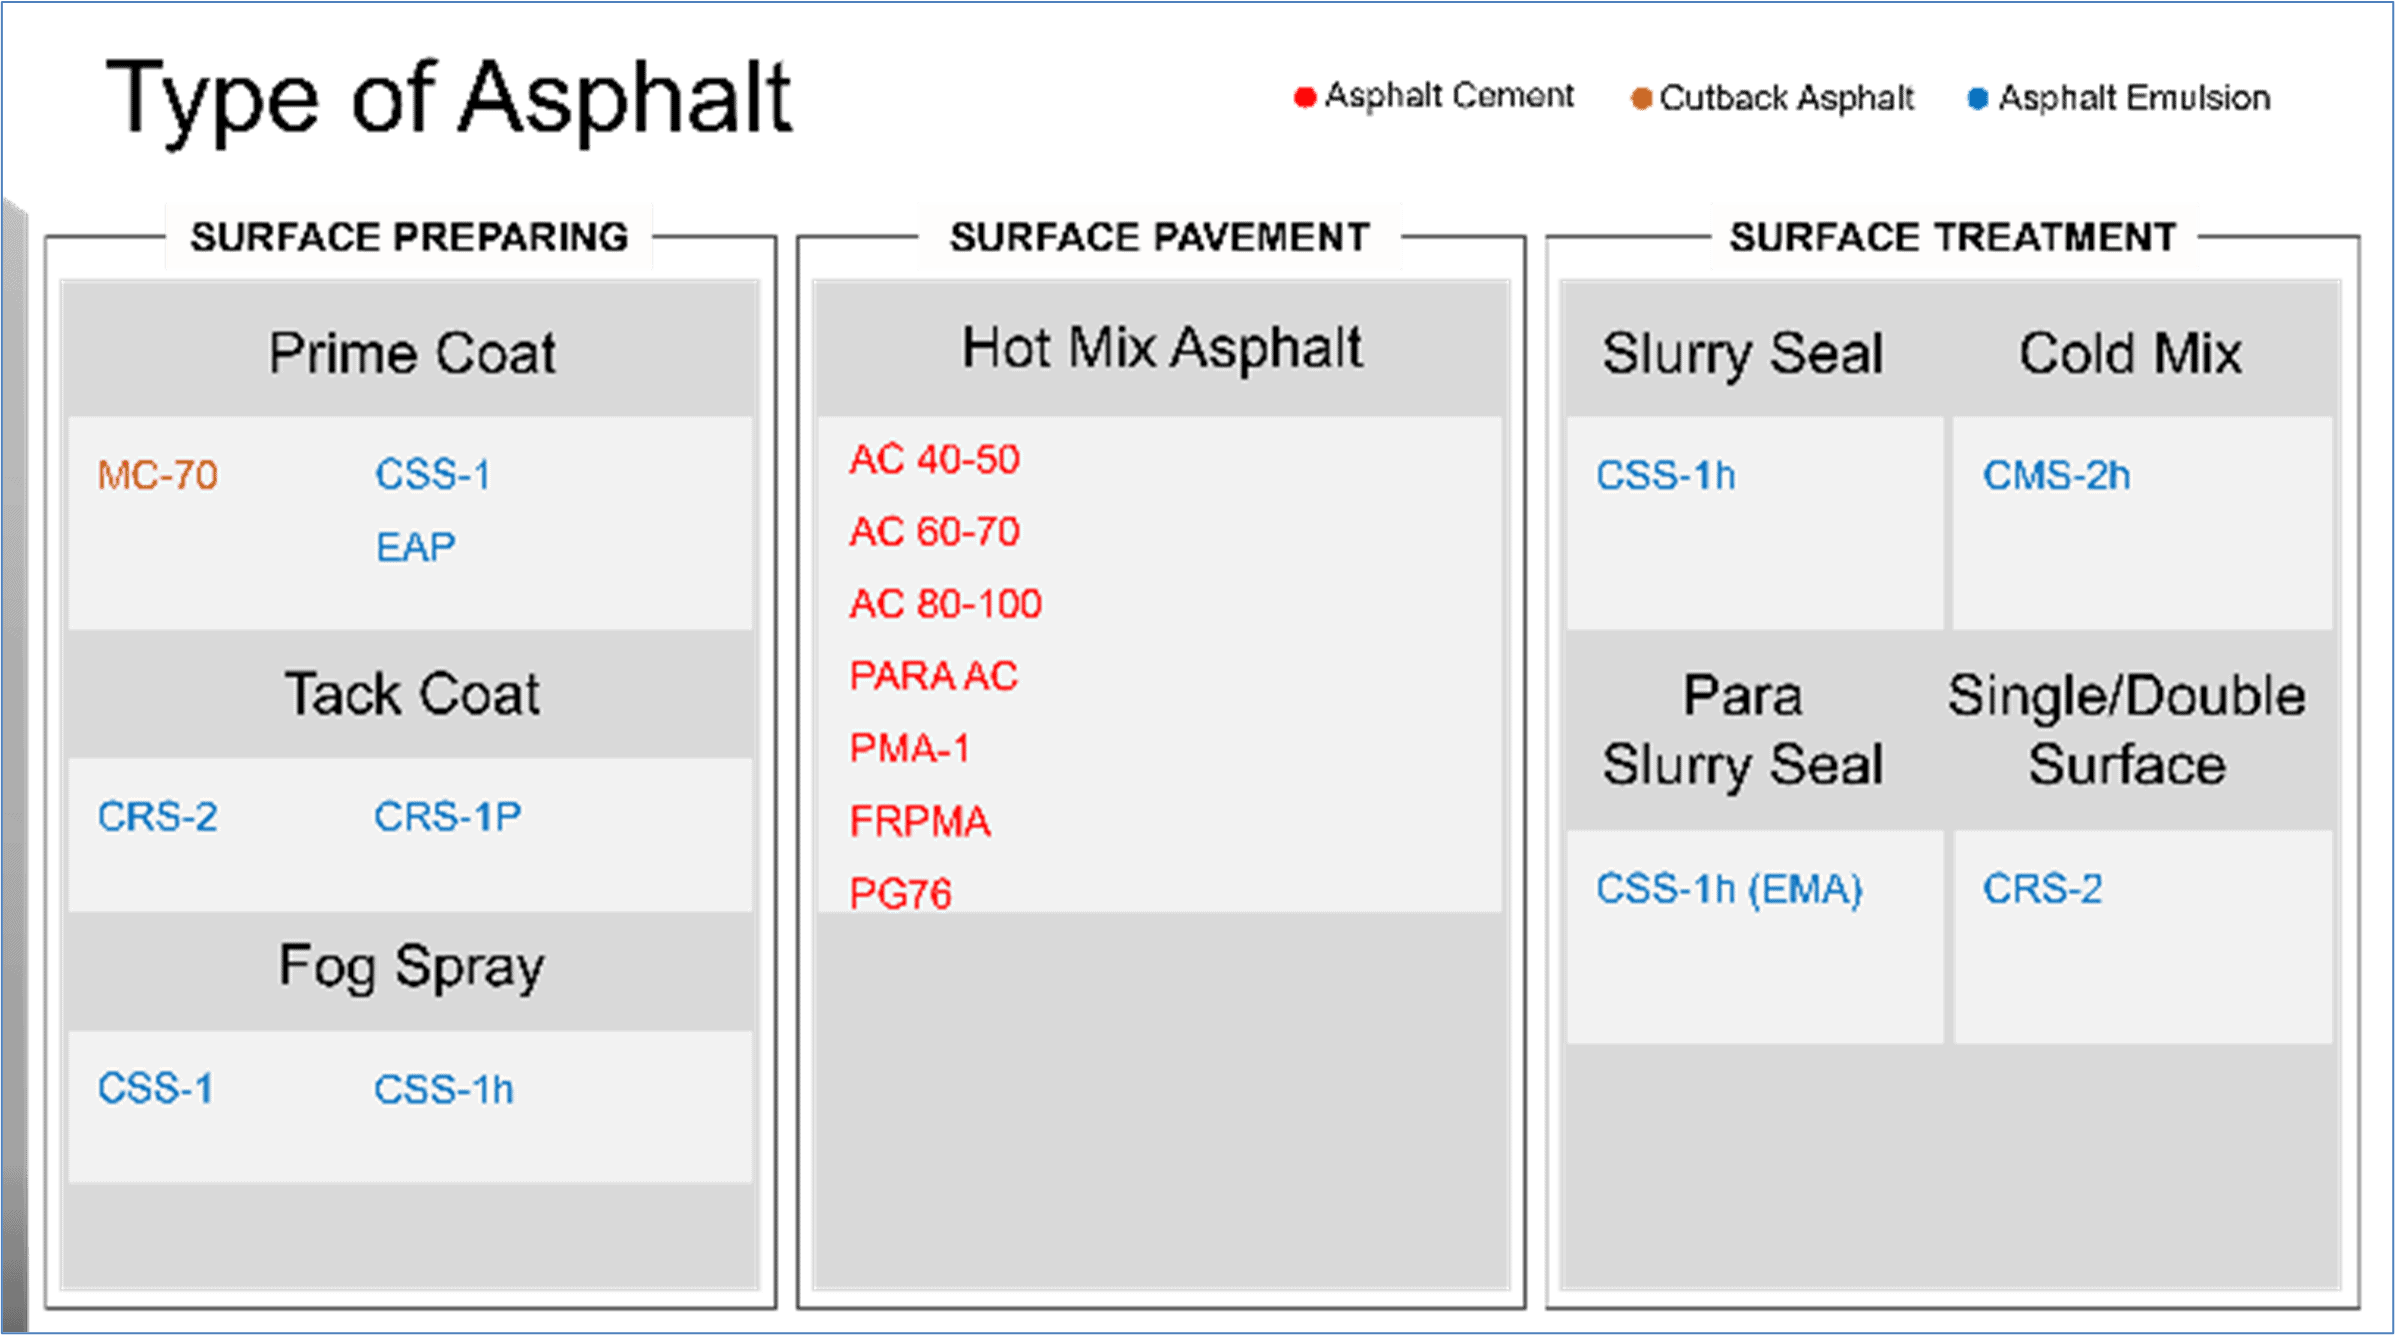 Type of Asphalt Cement-Cutback-Emulsion